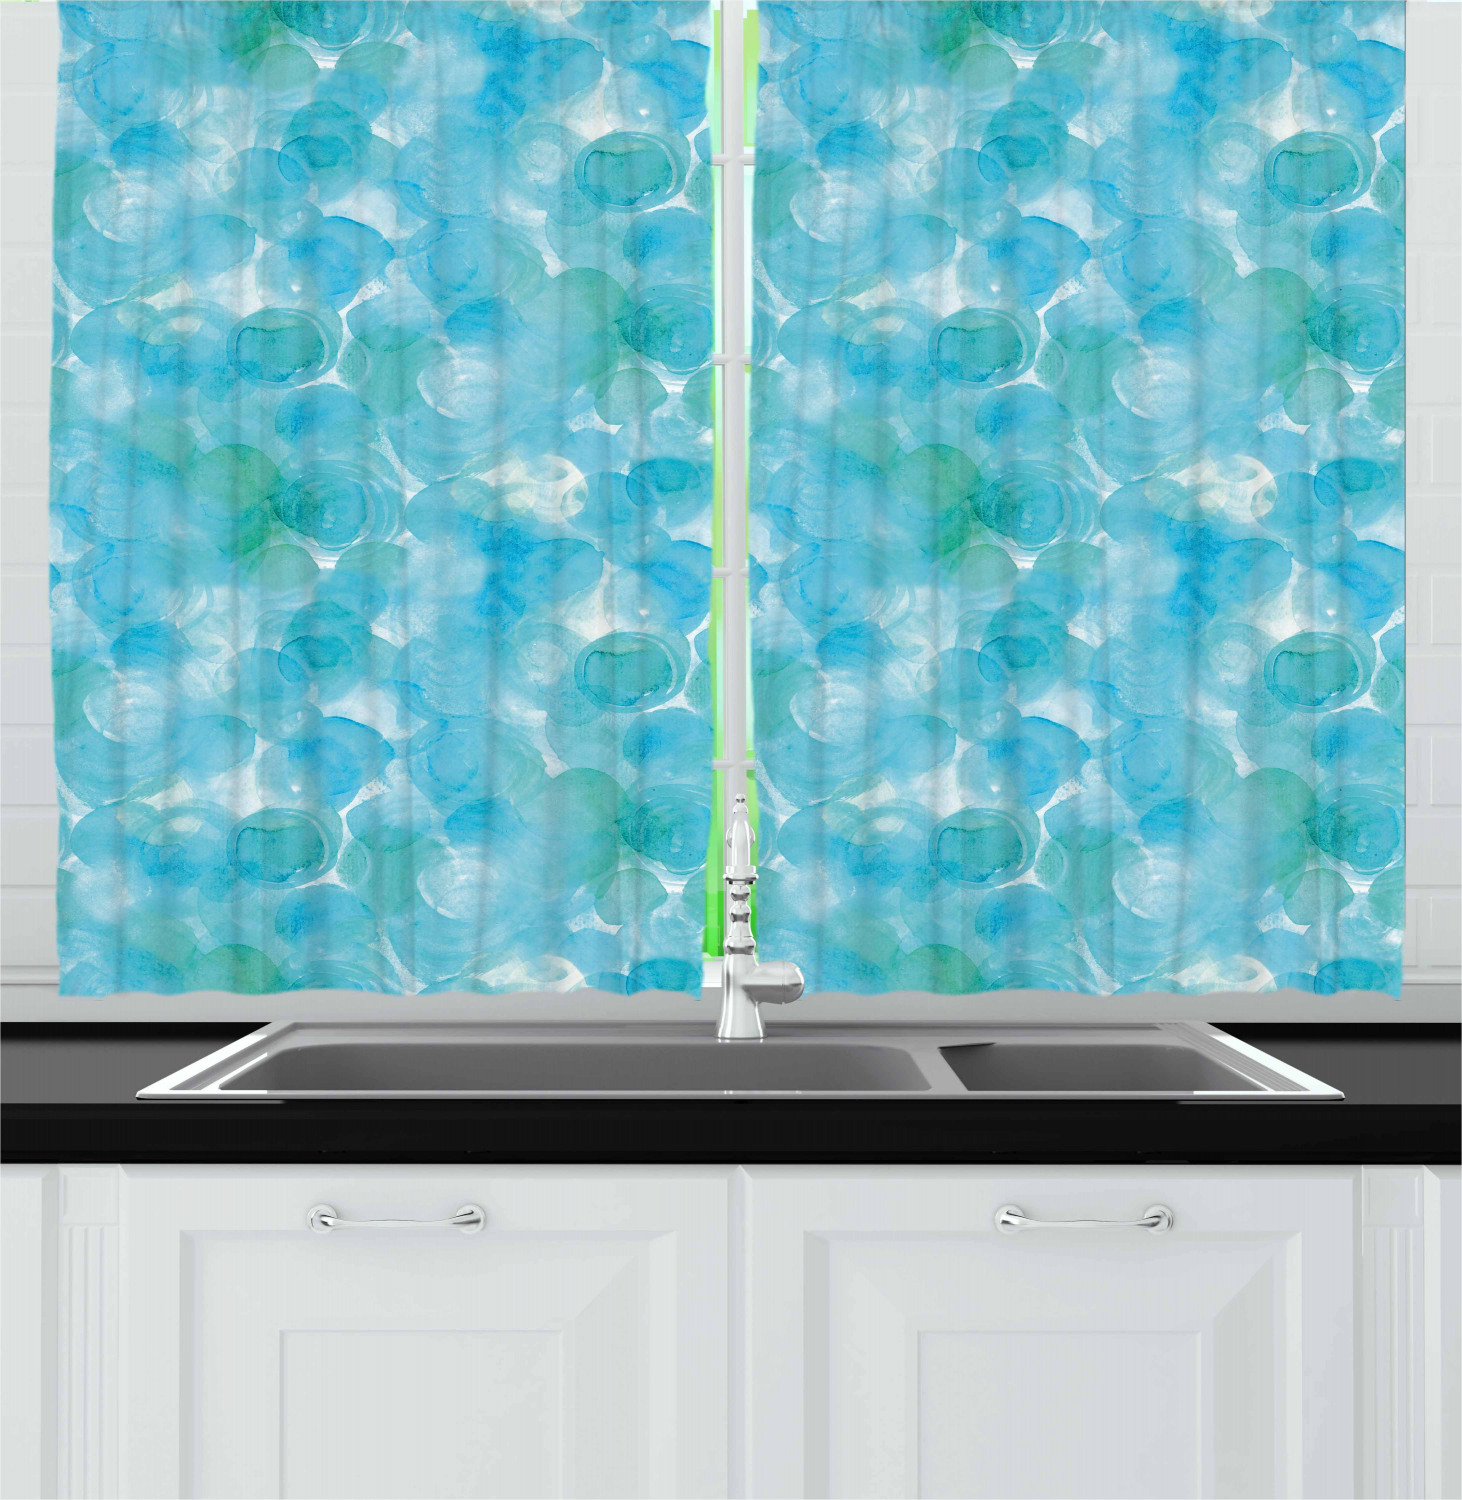 Teal Kitchen Curtains 2 Panel Set Window Drapes 55